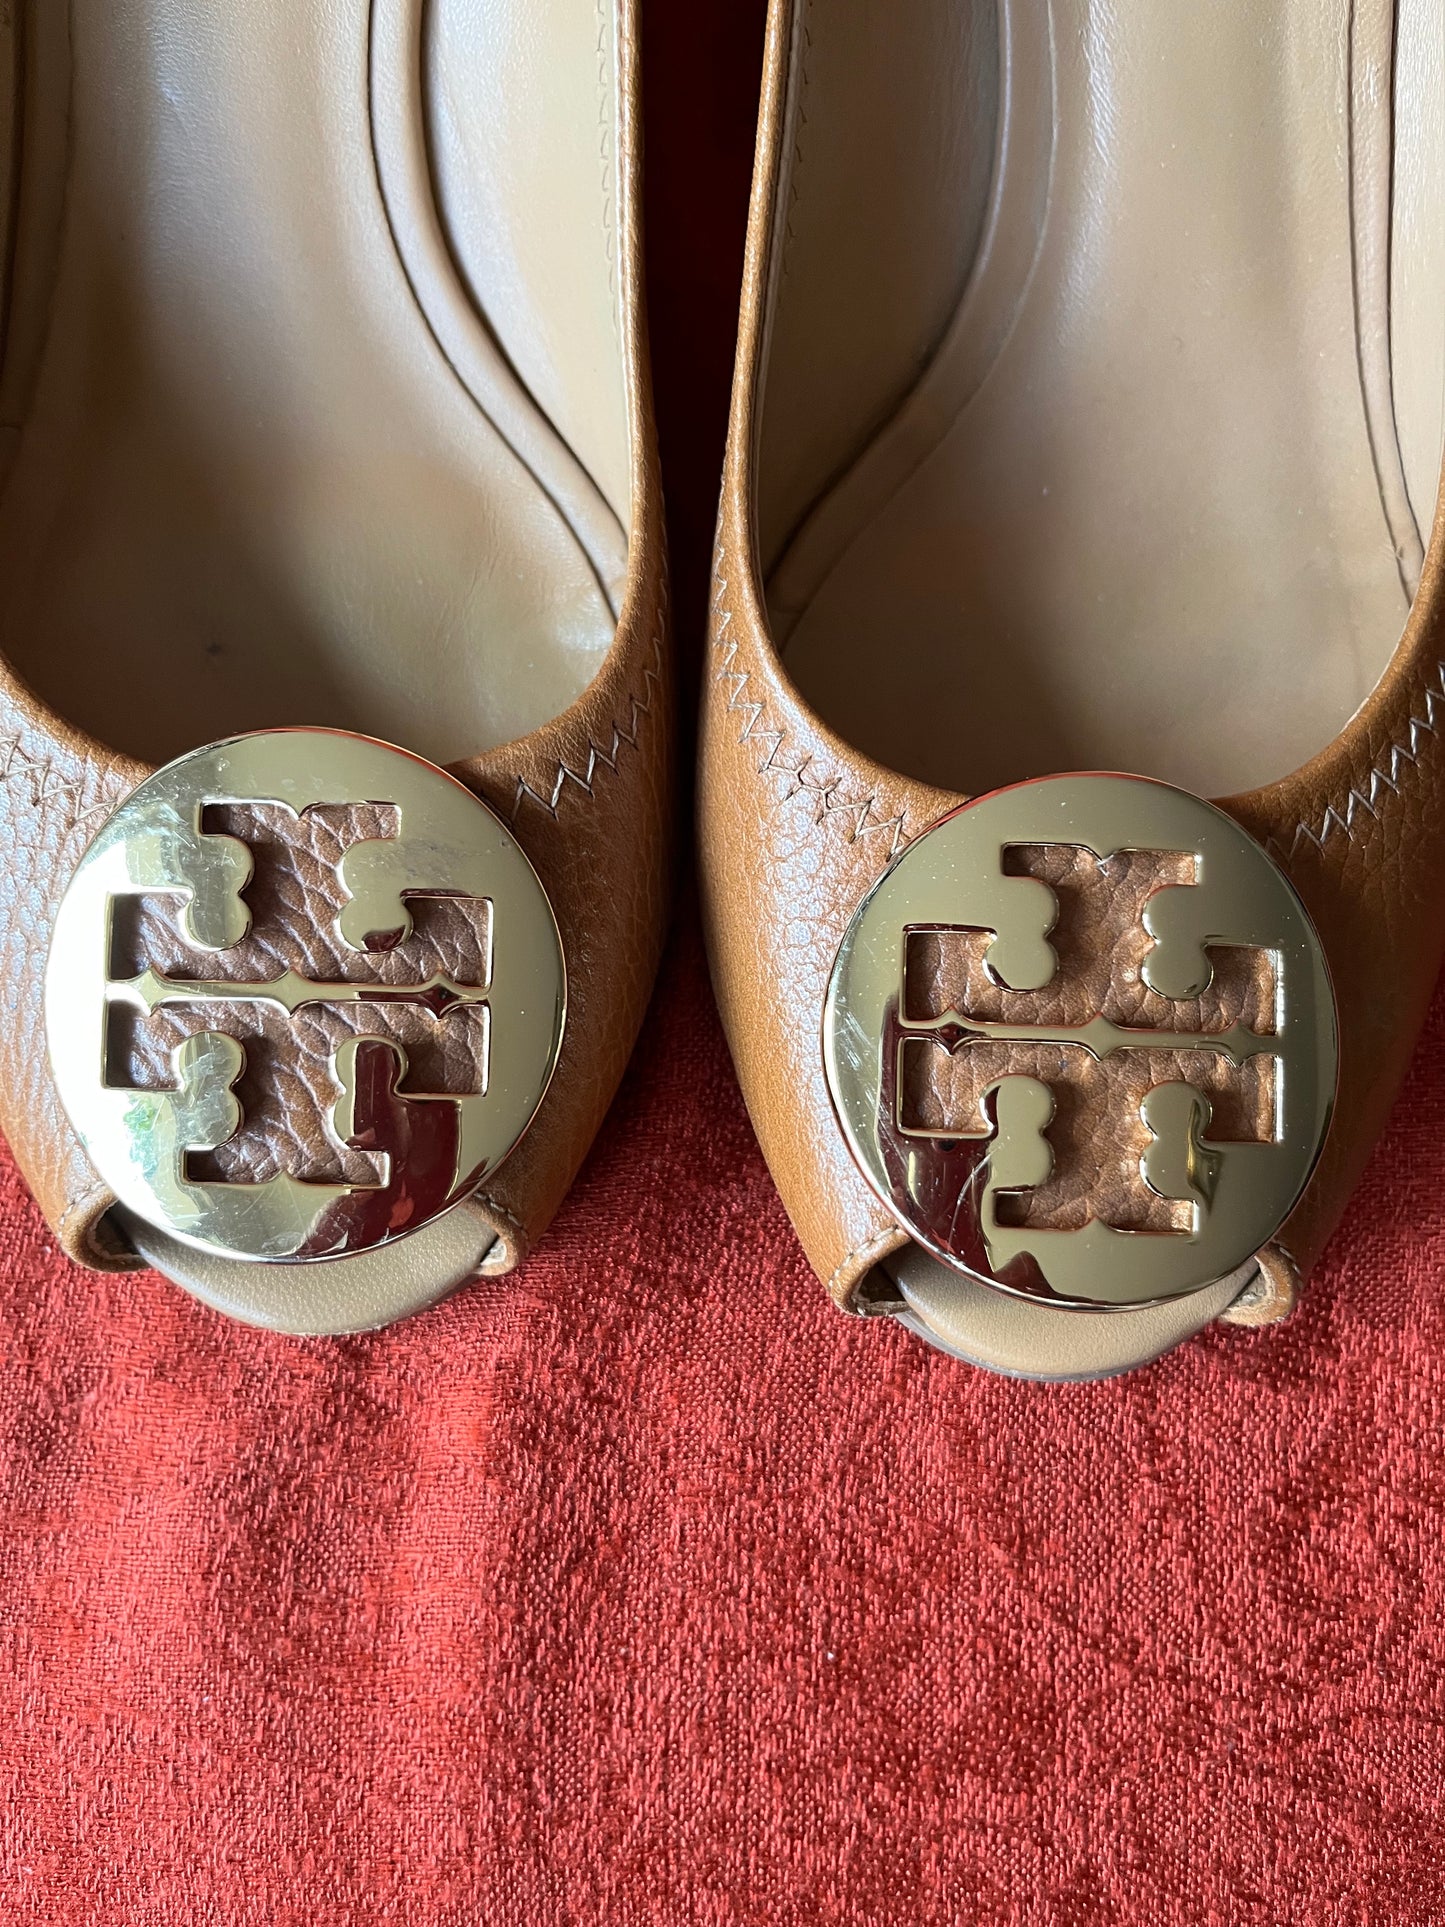 Tory Burch Brown Leather Julianne Peep Toe Wedge Heels-Size 8M